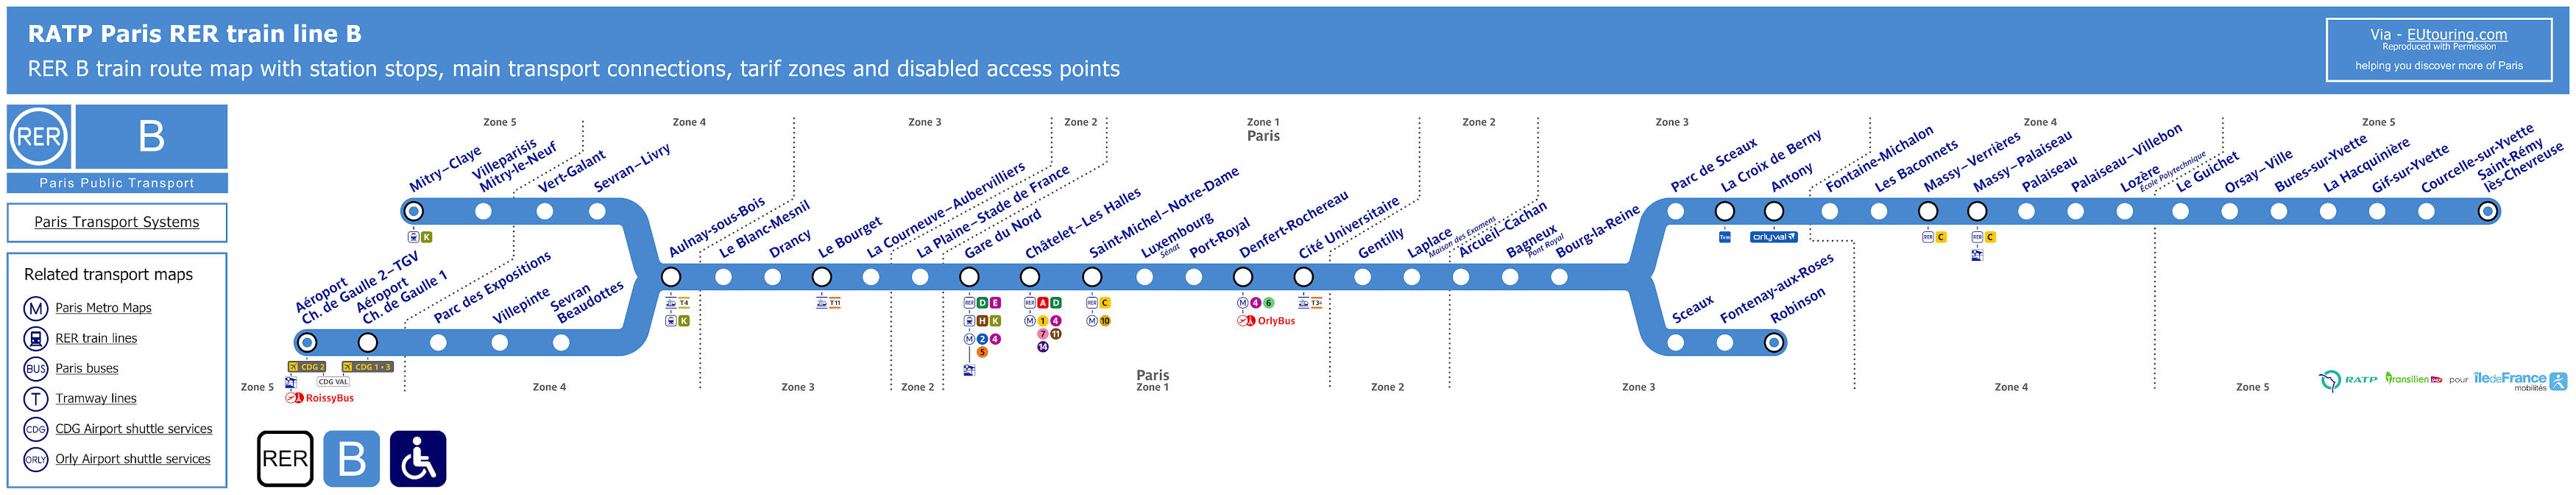 SNCF and RATP RER Train Maps for Paris and Ile de France